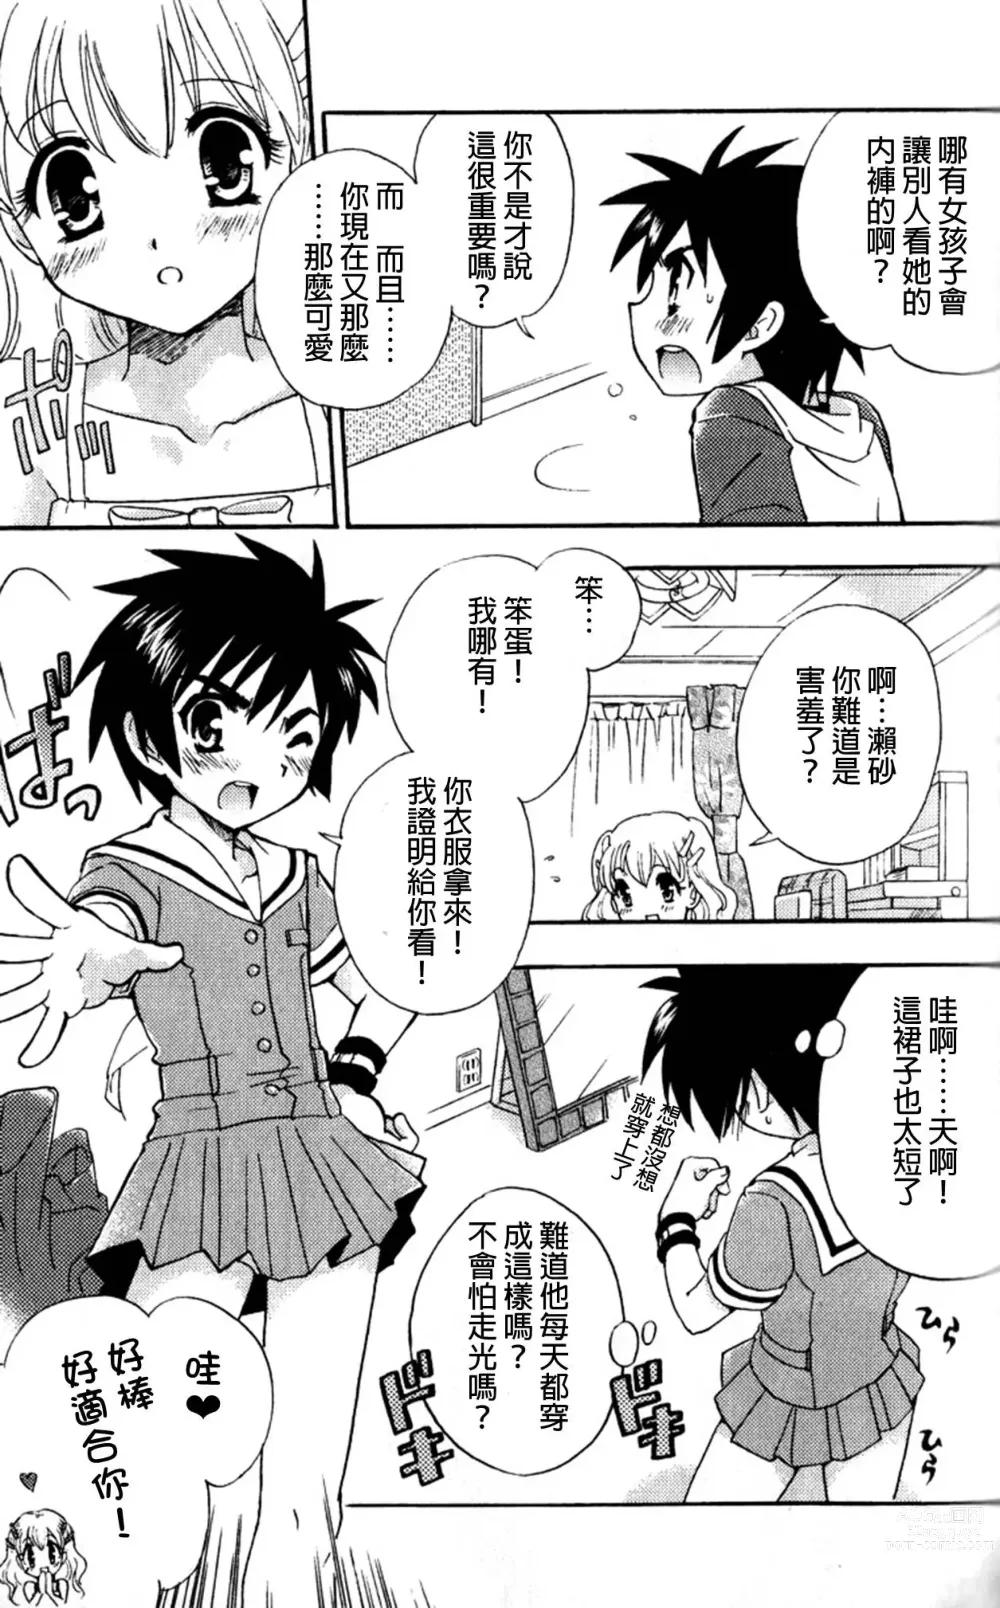 Page 5 of manga 裙子的魔法